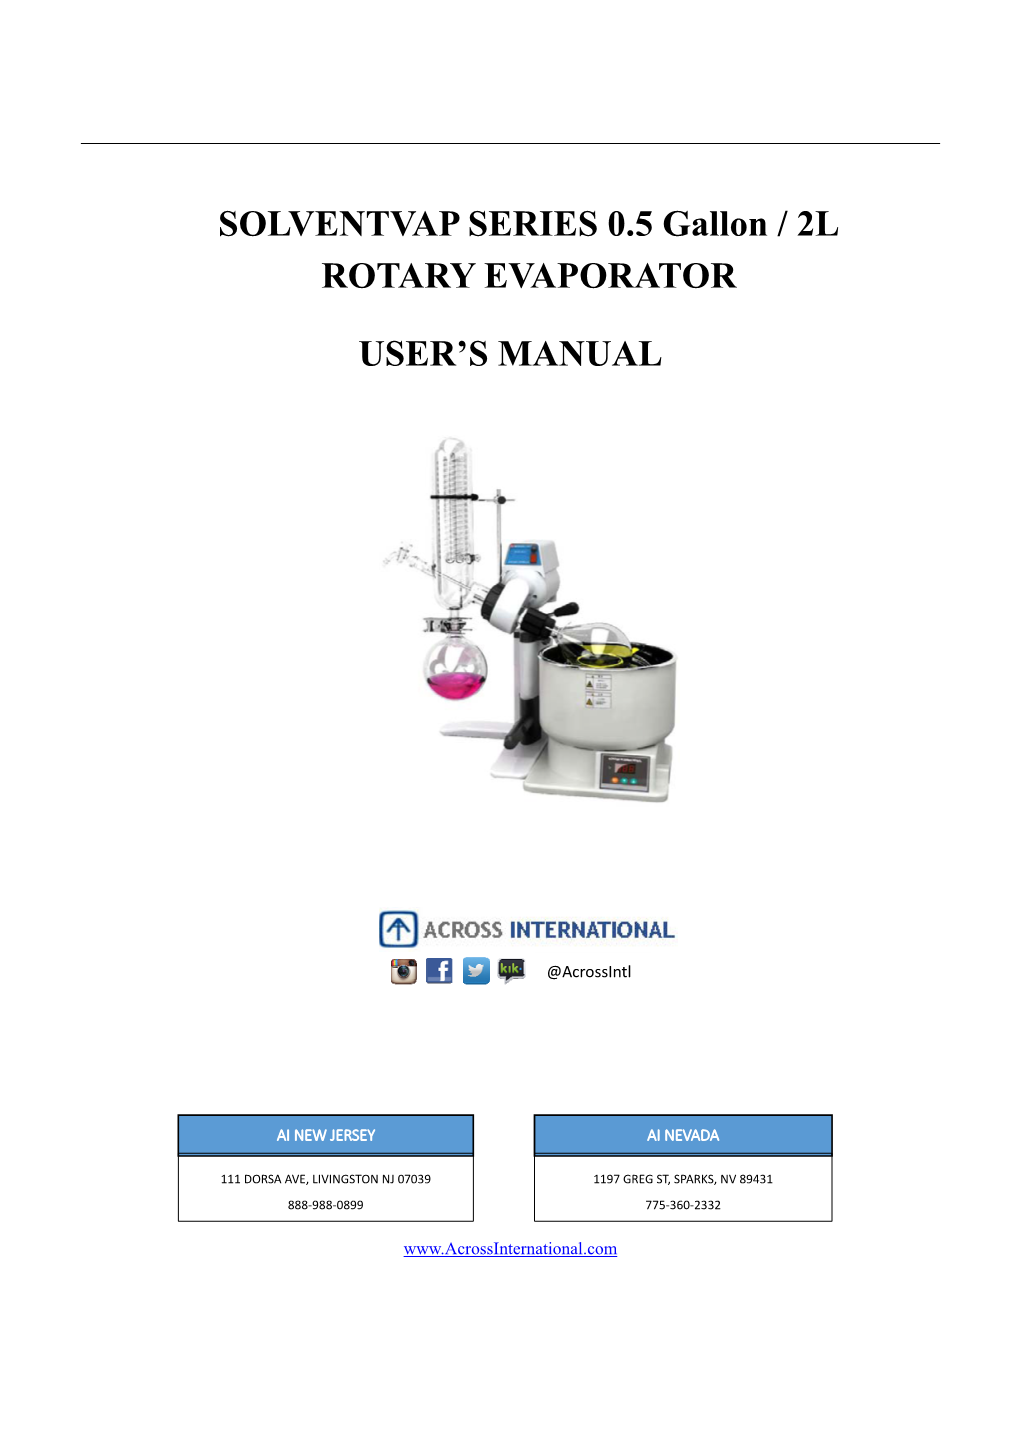 SOLVENTVAP SERIES 0.5 Gallon / 2L ROTARY EVAPORATOR USER's MANUAL